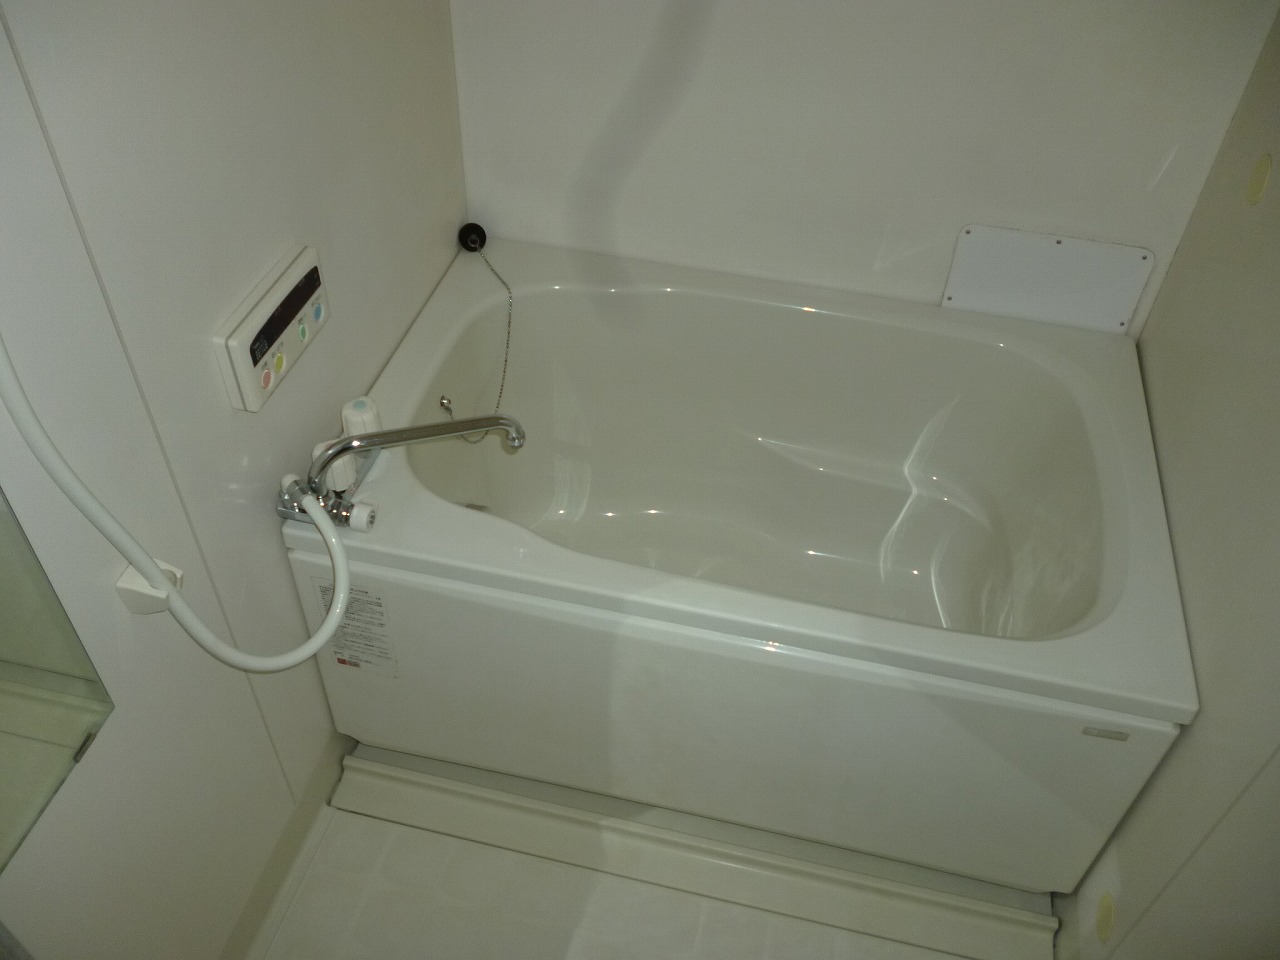 Bath. With additional heating